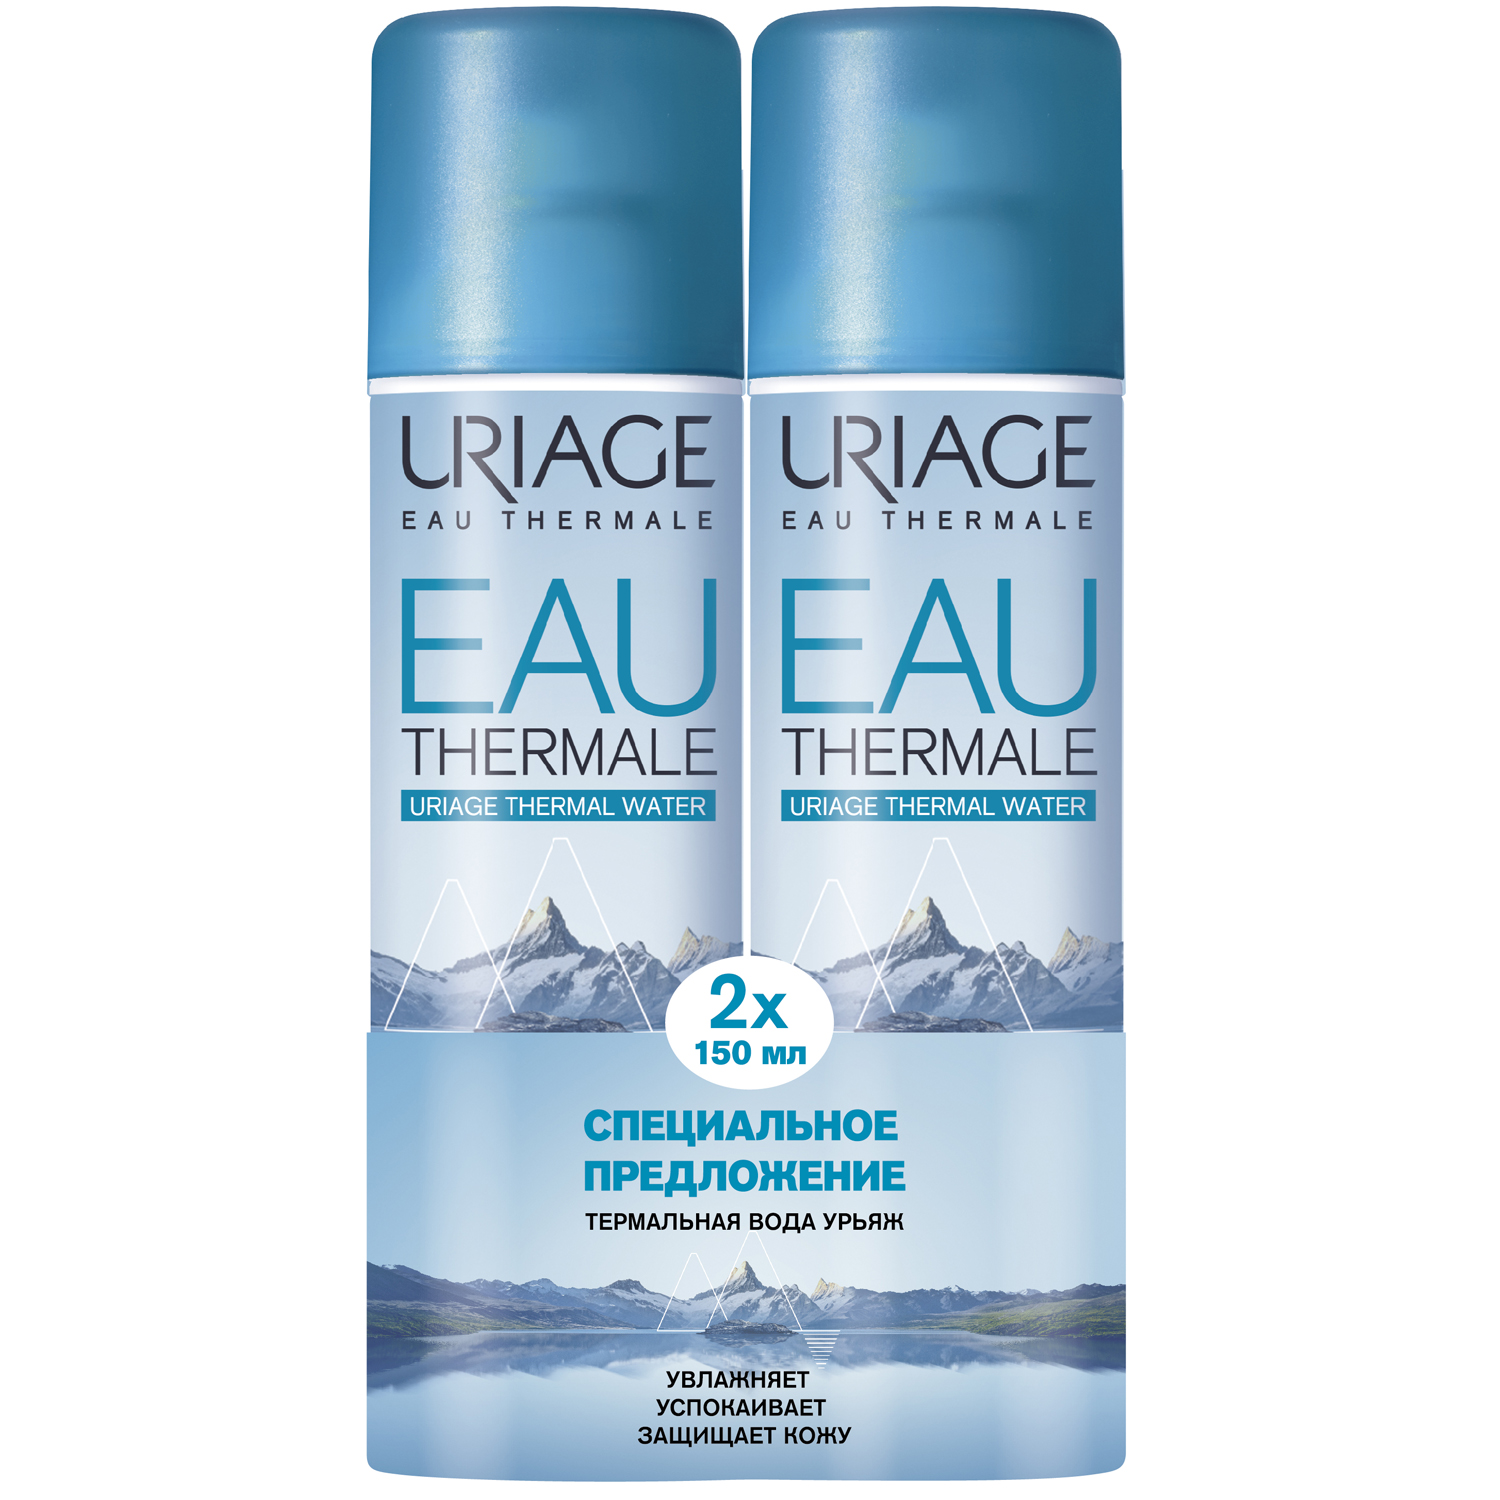 Uriage Термальная вода Урьяж, 2 х 150 мл (Uriage, Eau thermale)